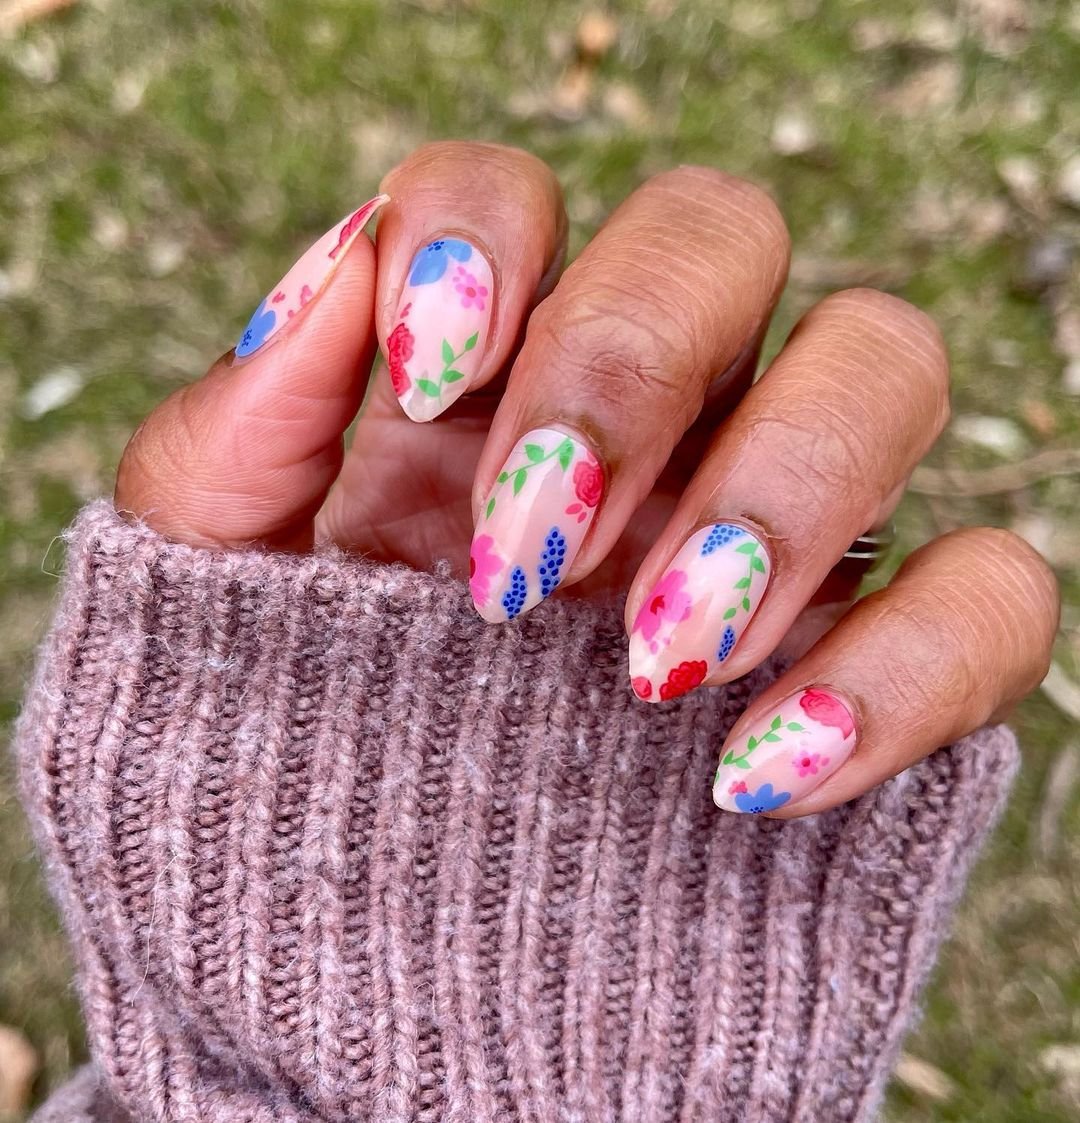 Nail Art │ Pink and Lace Wedding manicure [26 Great Nail Art Ideas] /  Polished Polyglot